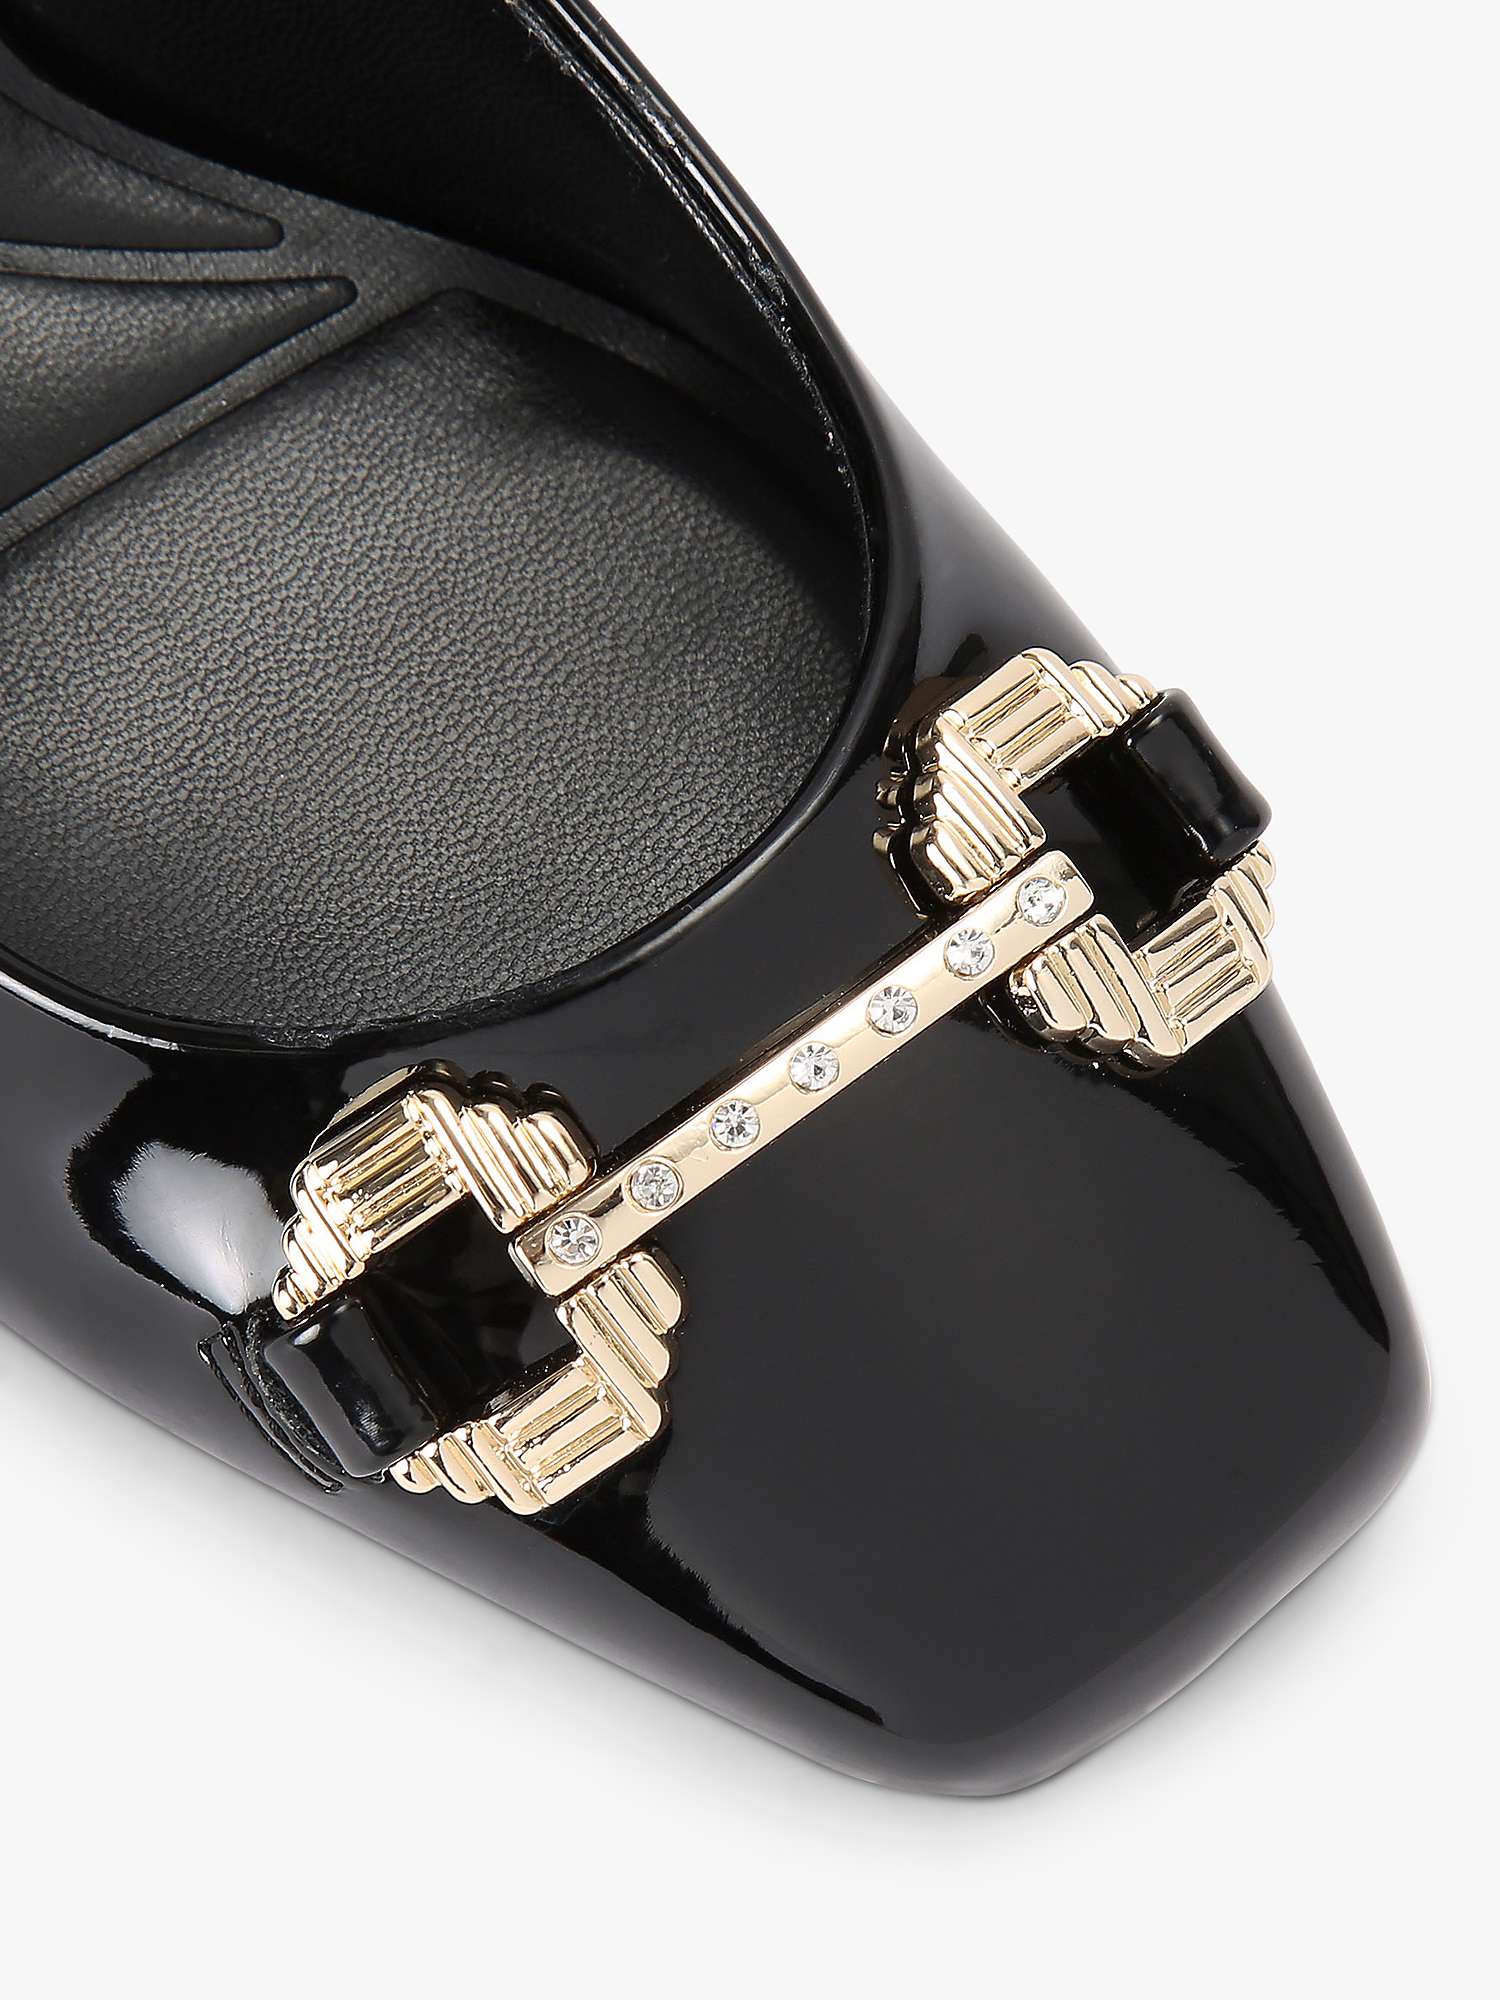 Buy Carvela Poise 2 Patent Slingback Court Shoes Online at johnlewis.com